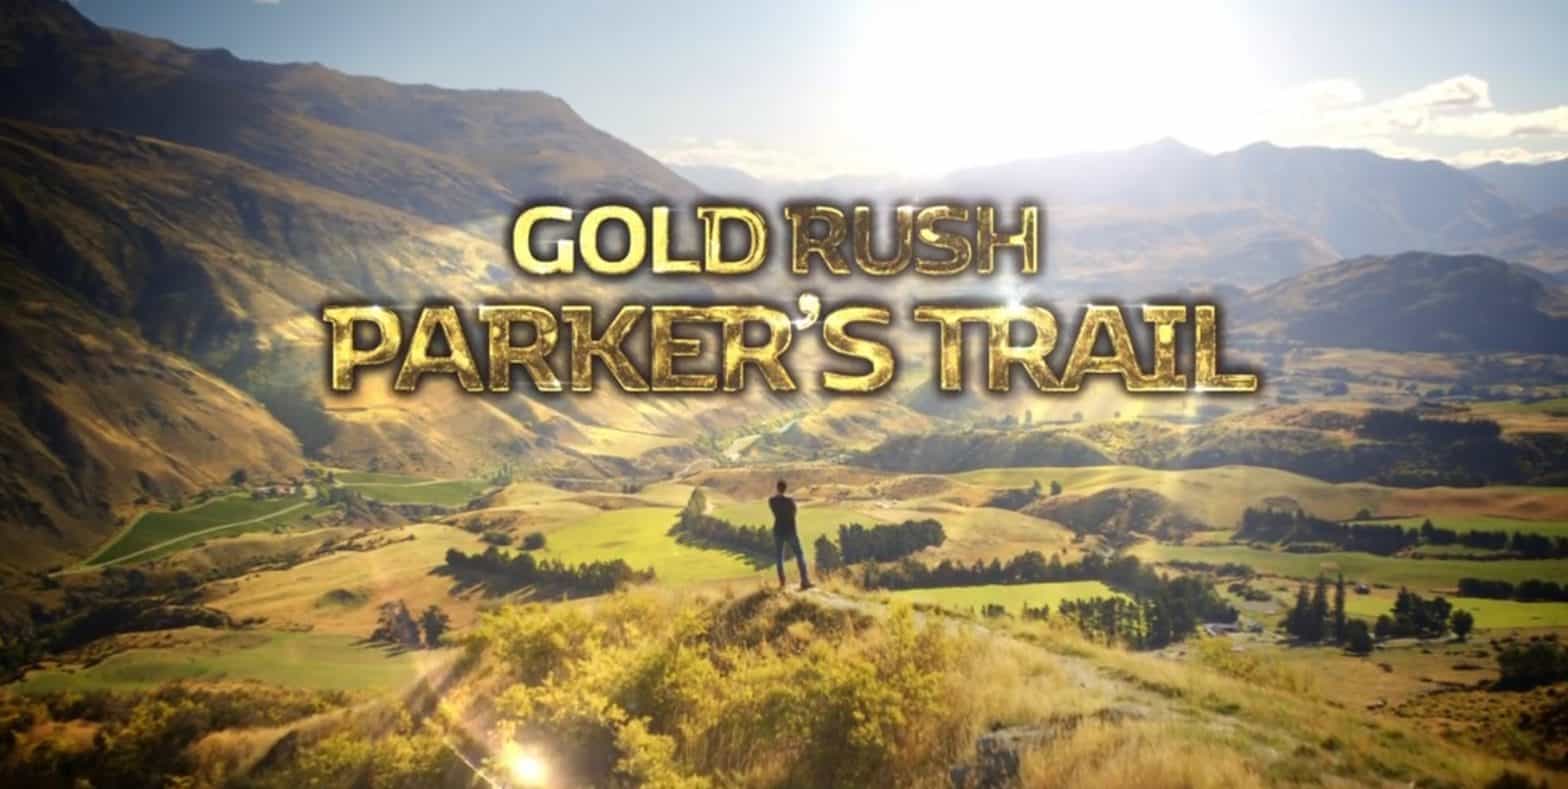 Gold Rush: Parker's Trail Season 6 Episode 3